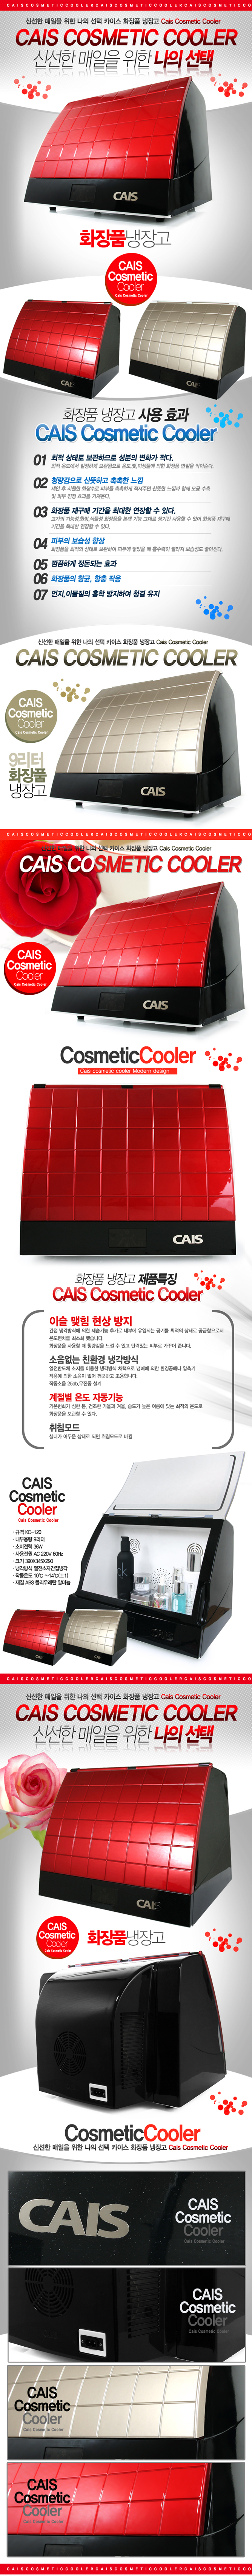 mini sized cosmetic cooler